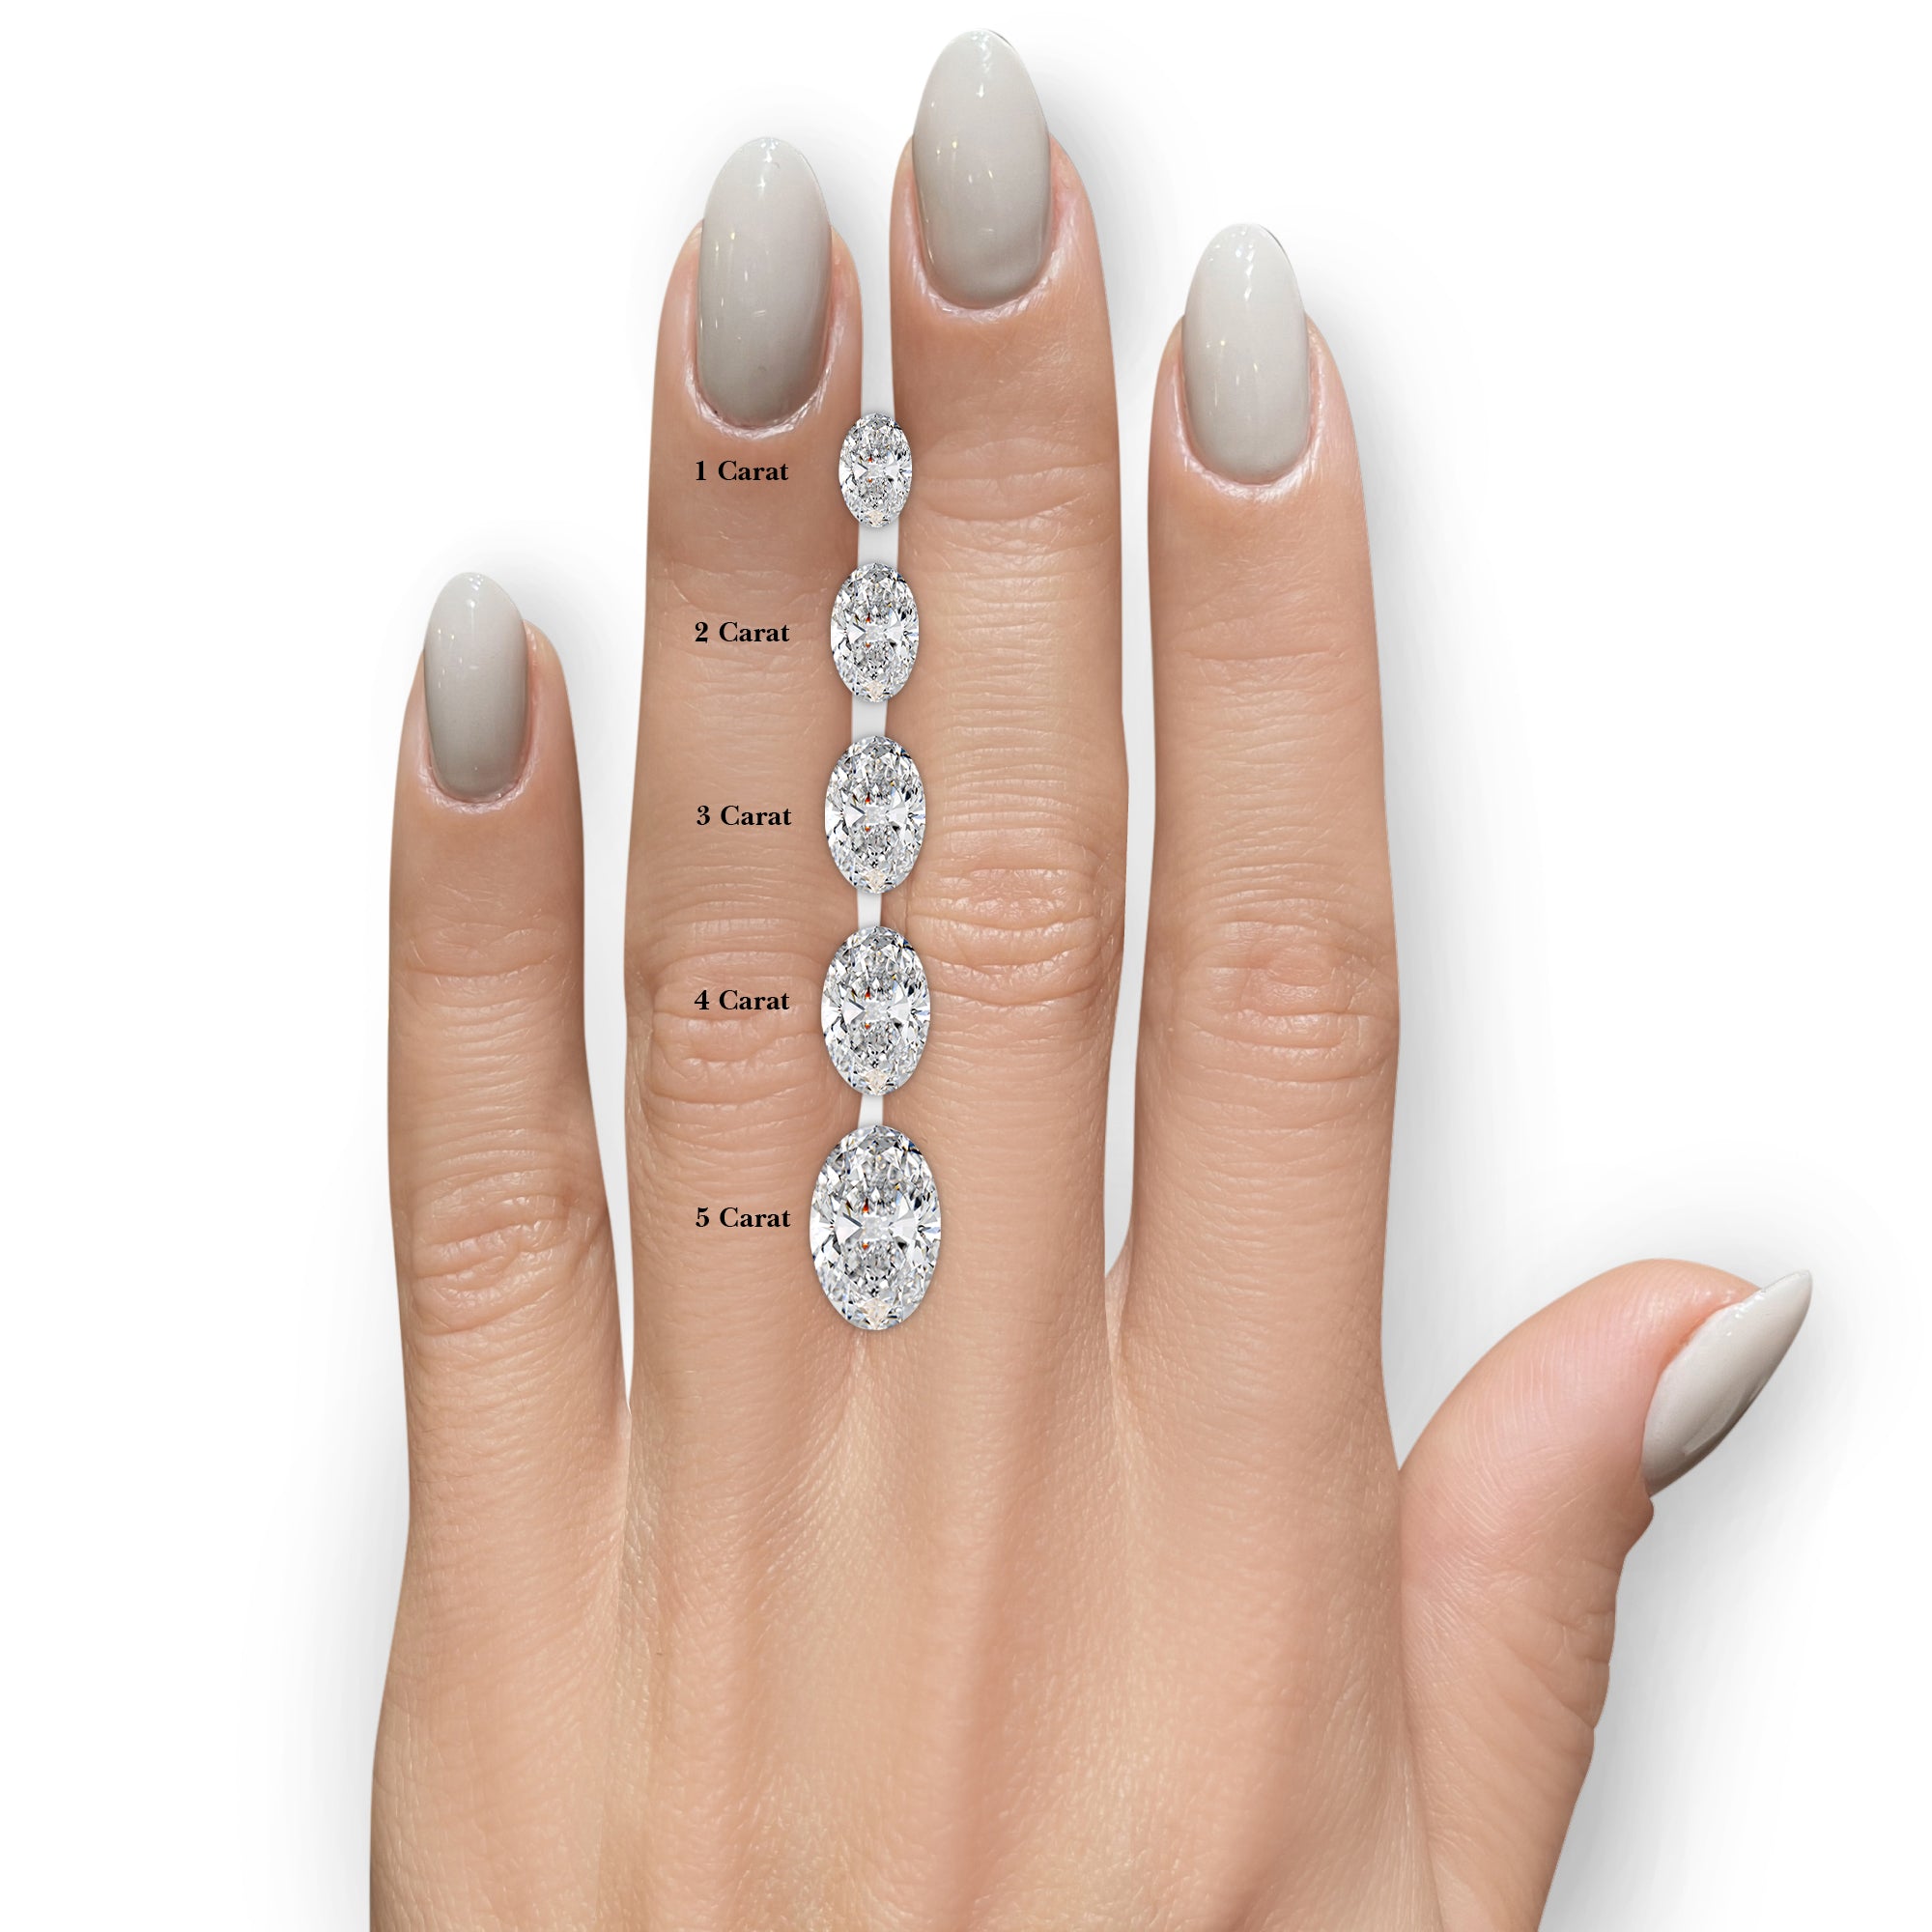 Kamala Diamond Engagement Ring -18K White Gold